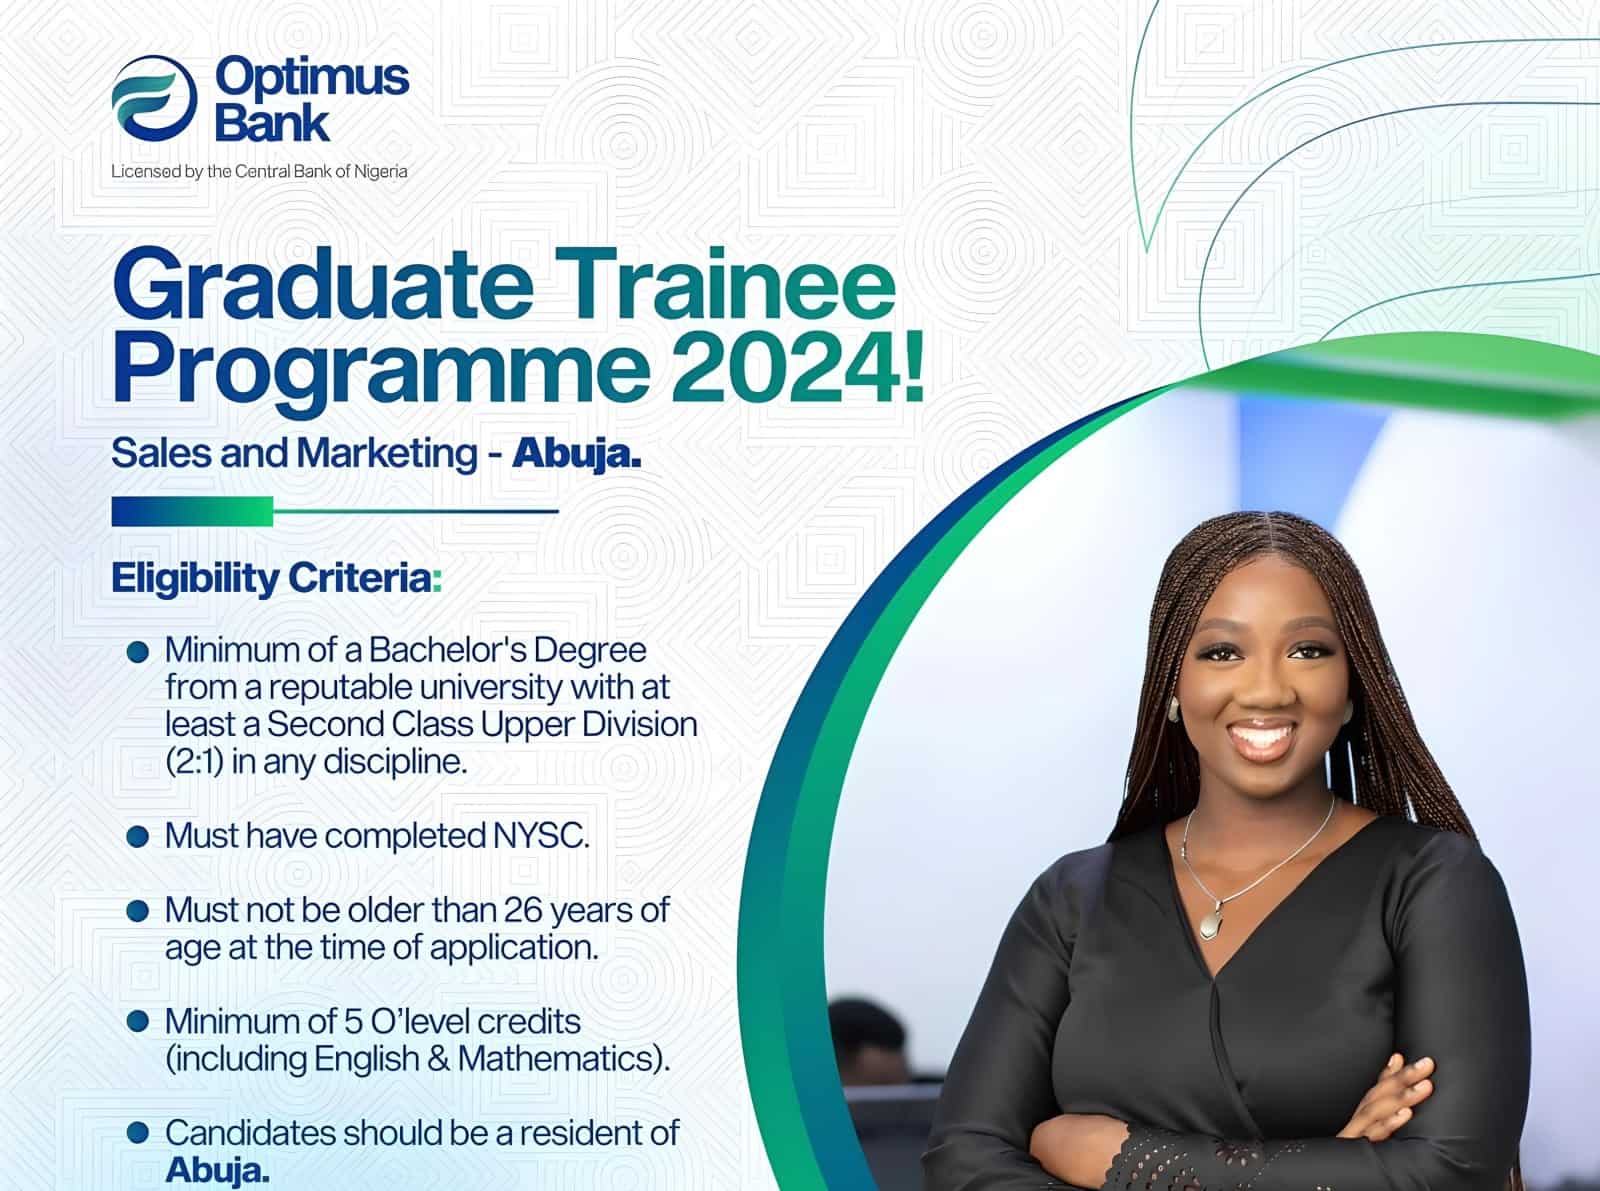 Optimus Bank Graduate Trainee Programme